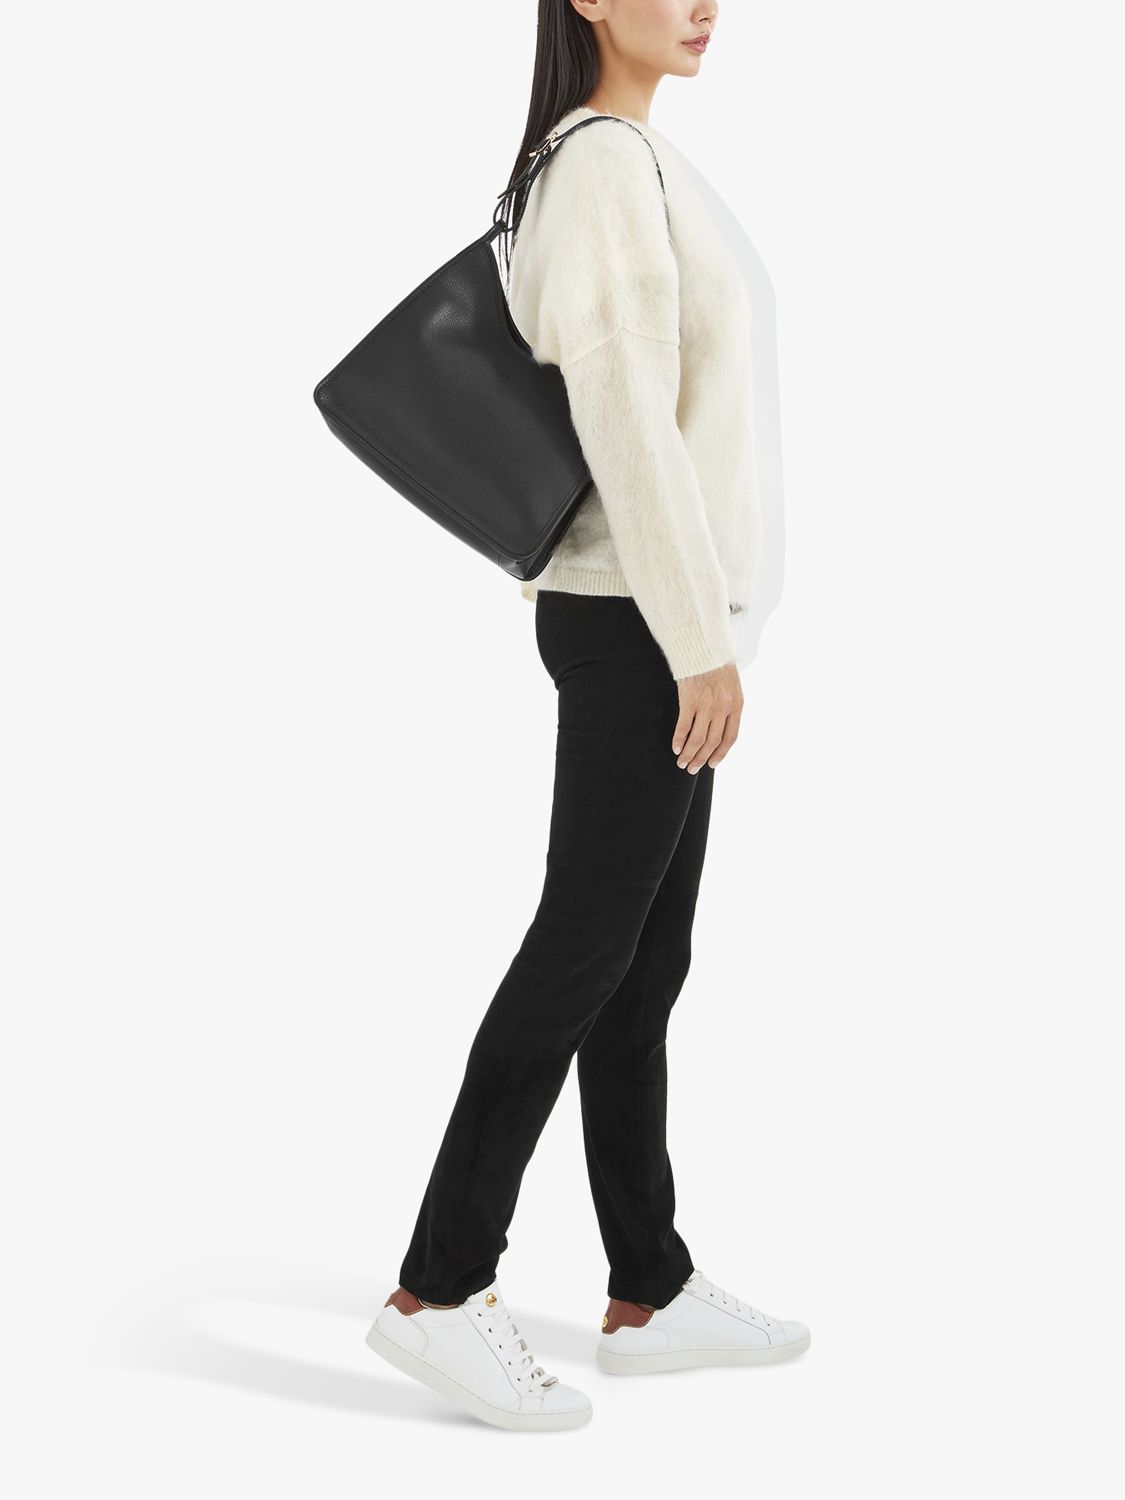 Buy Longchamp Le Foulonné Medium Leather Shoulder Bag Online at johnlewis.com